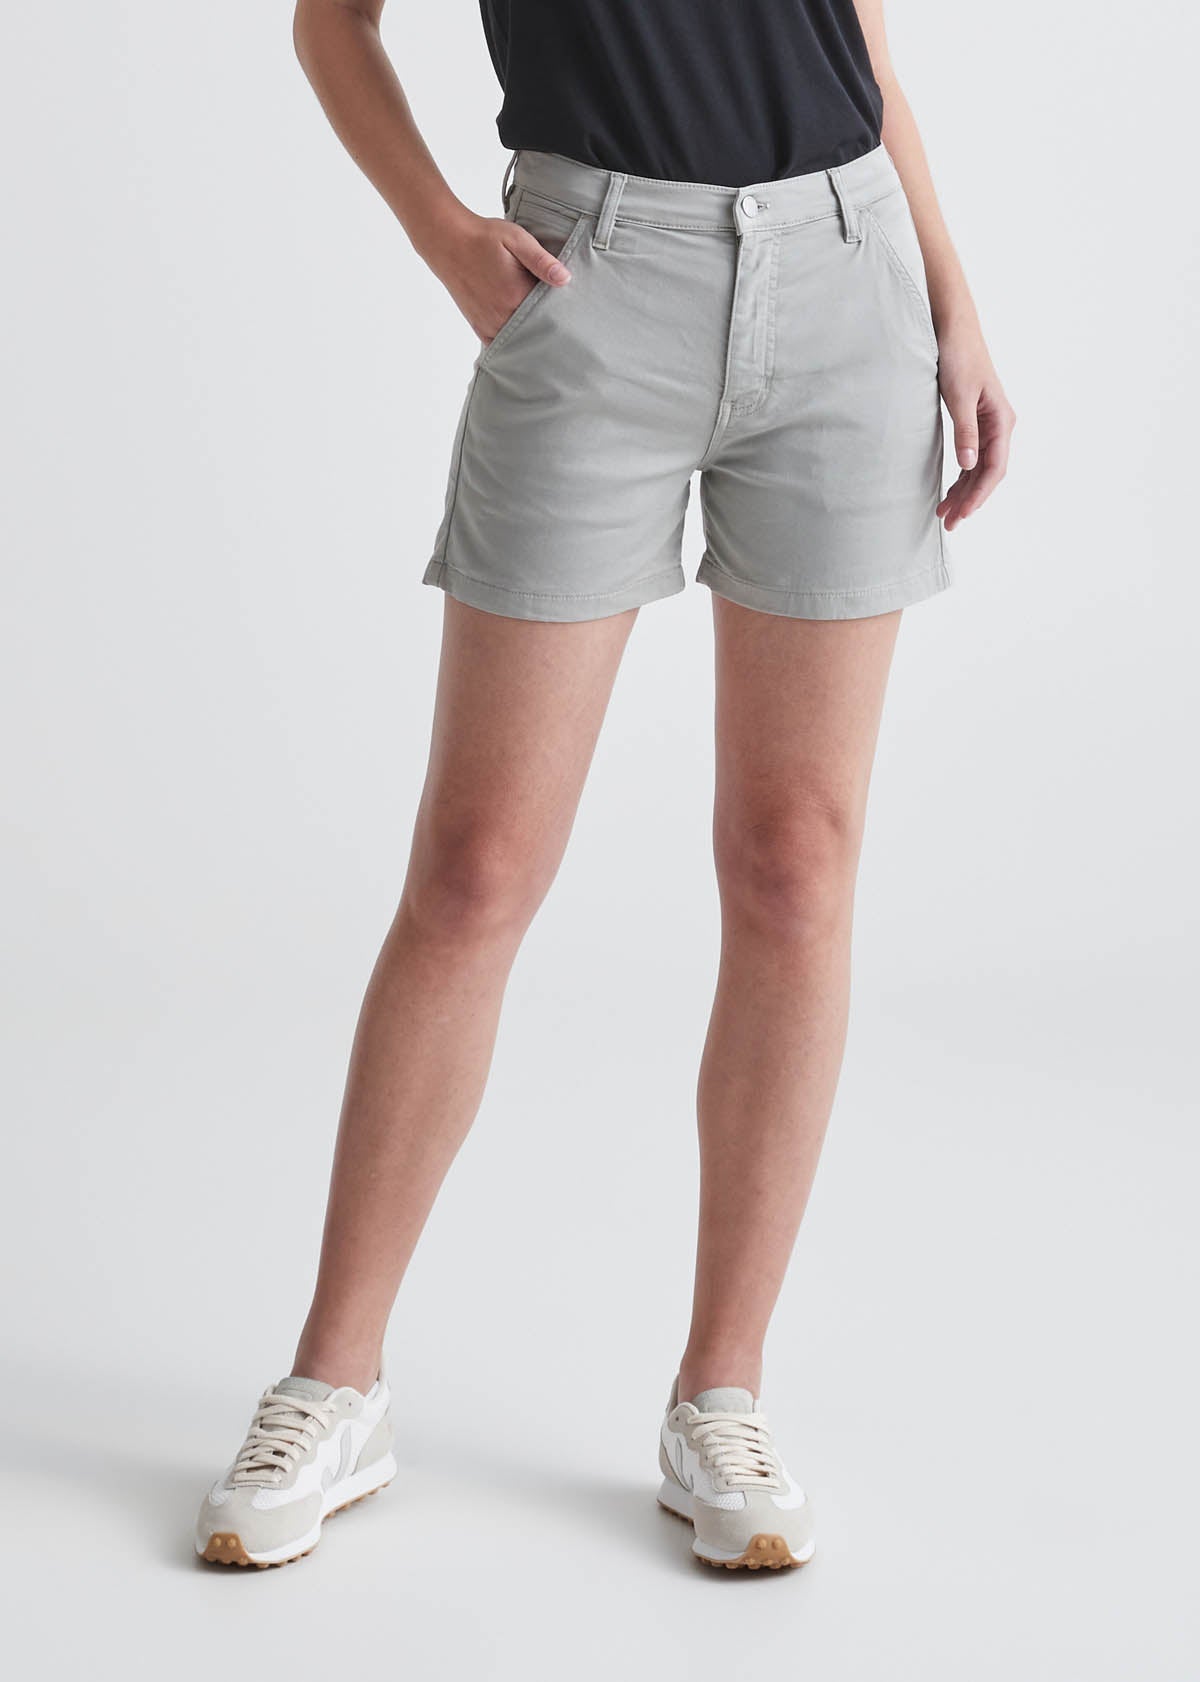 Women's Reflective Pants and Shorts